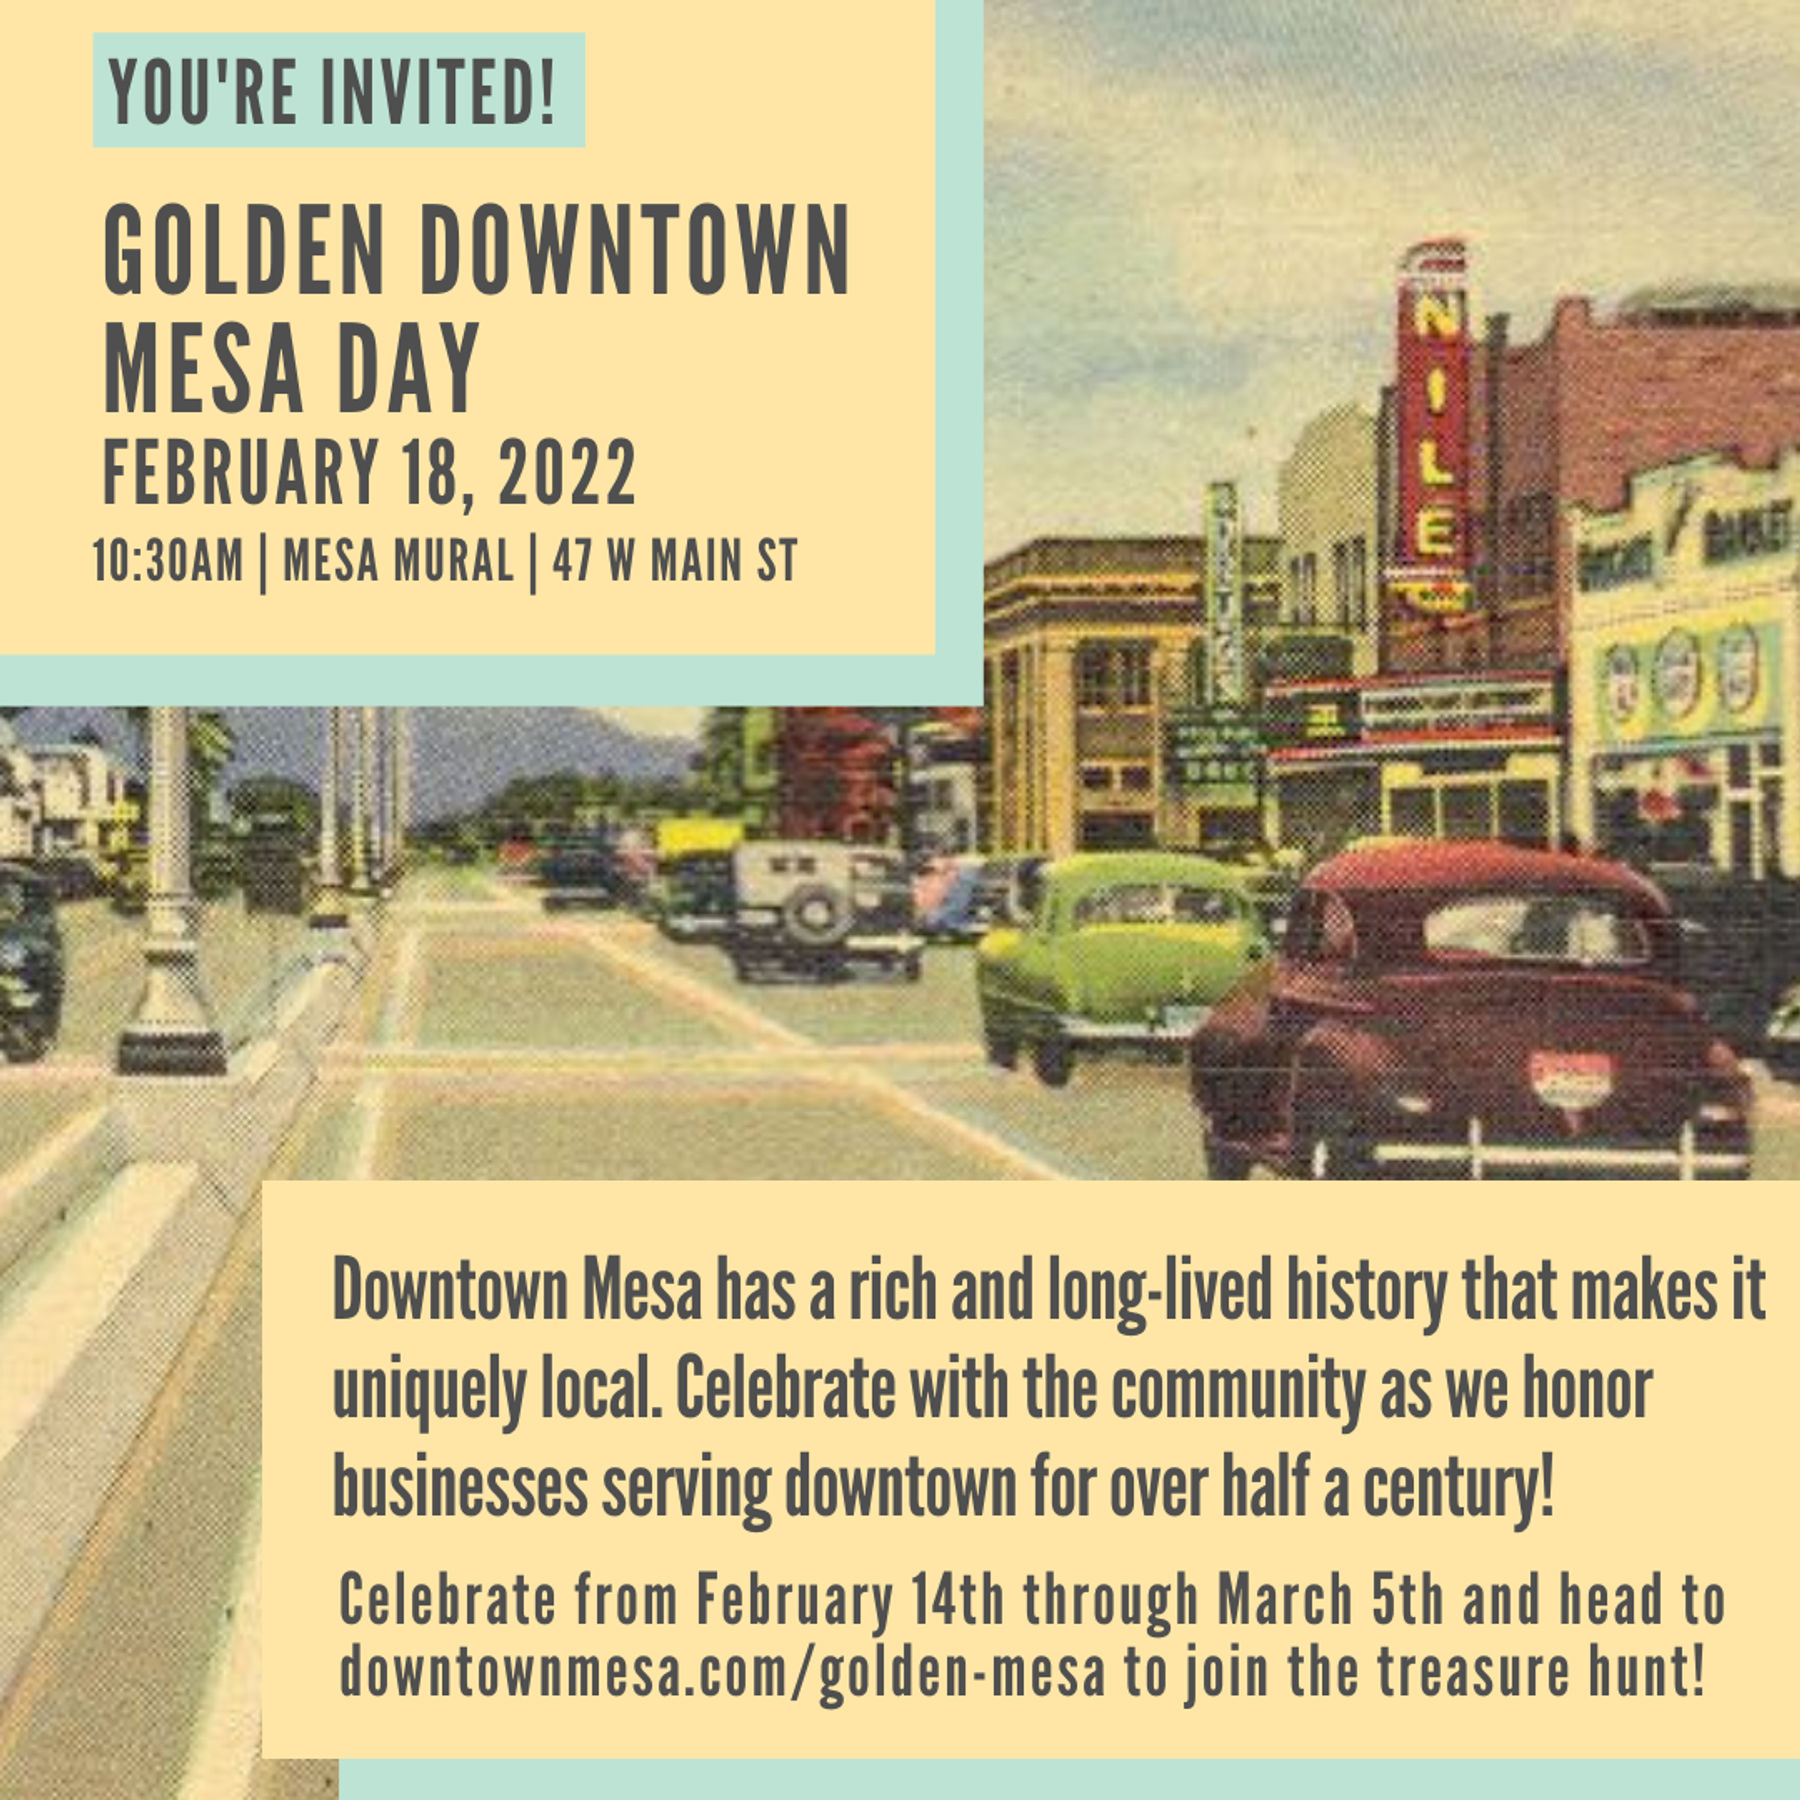 Golden Downtown Mesa Day Downtown Mesa